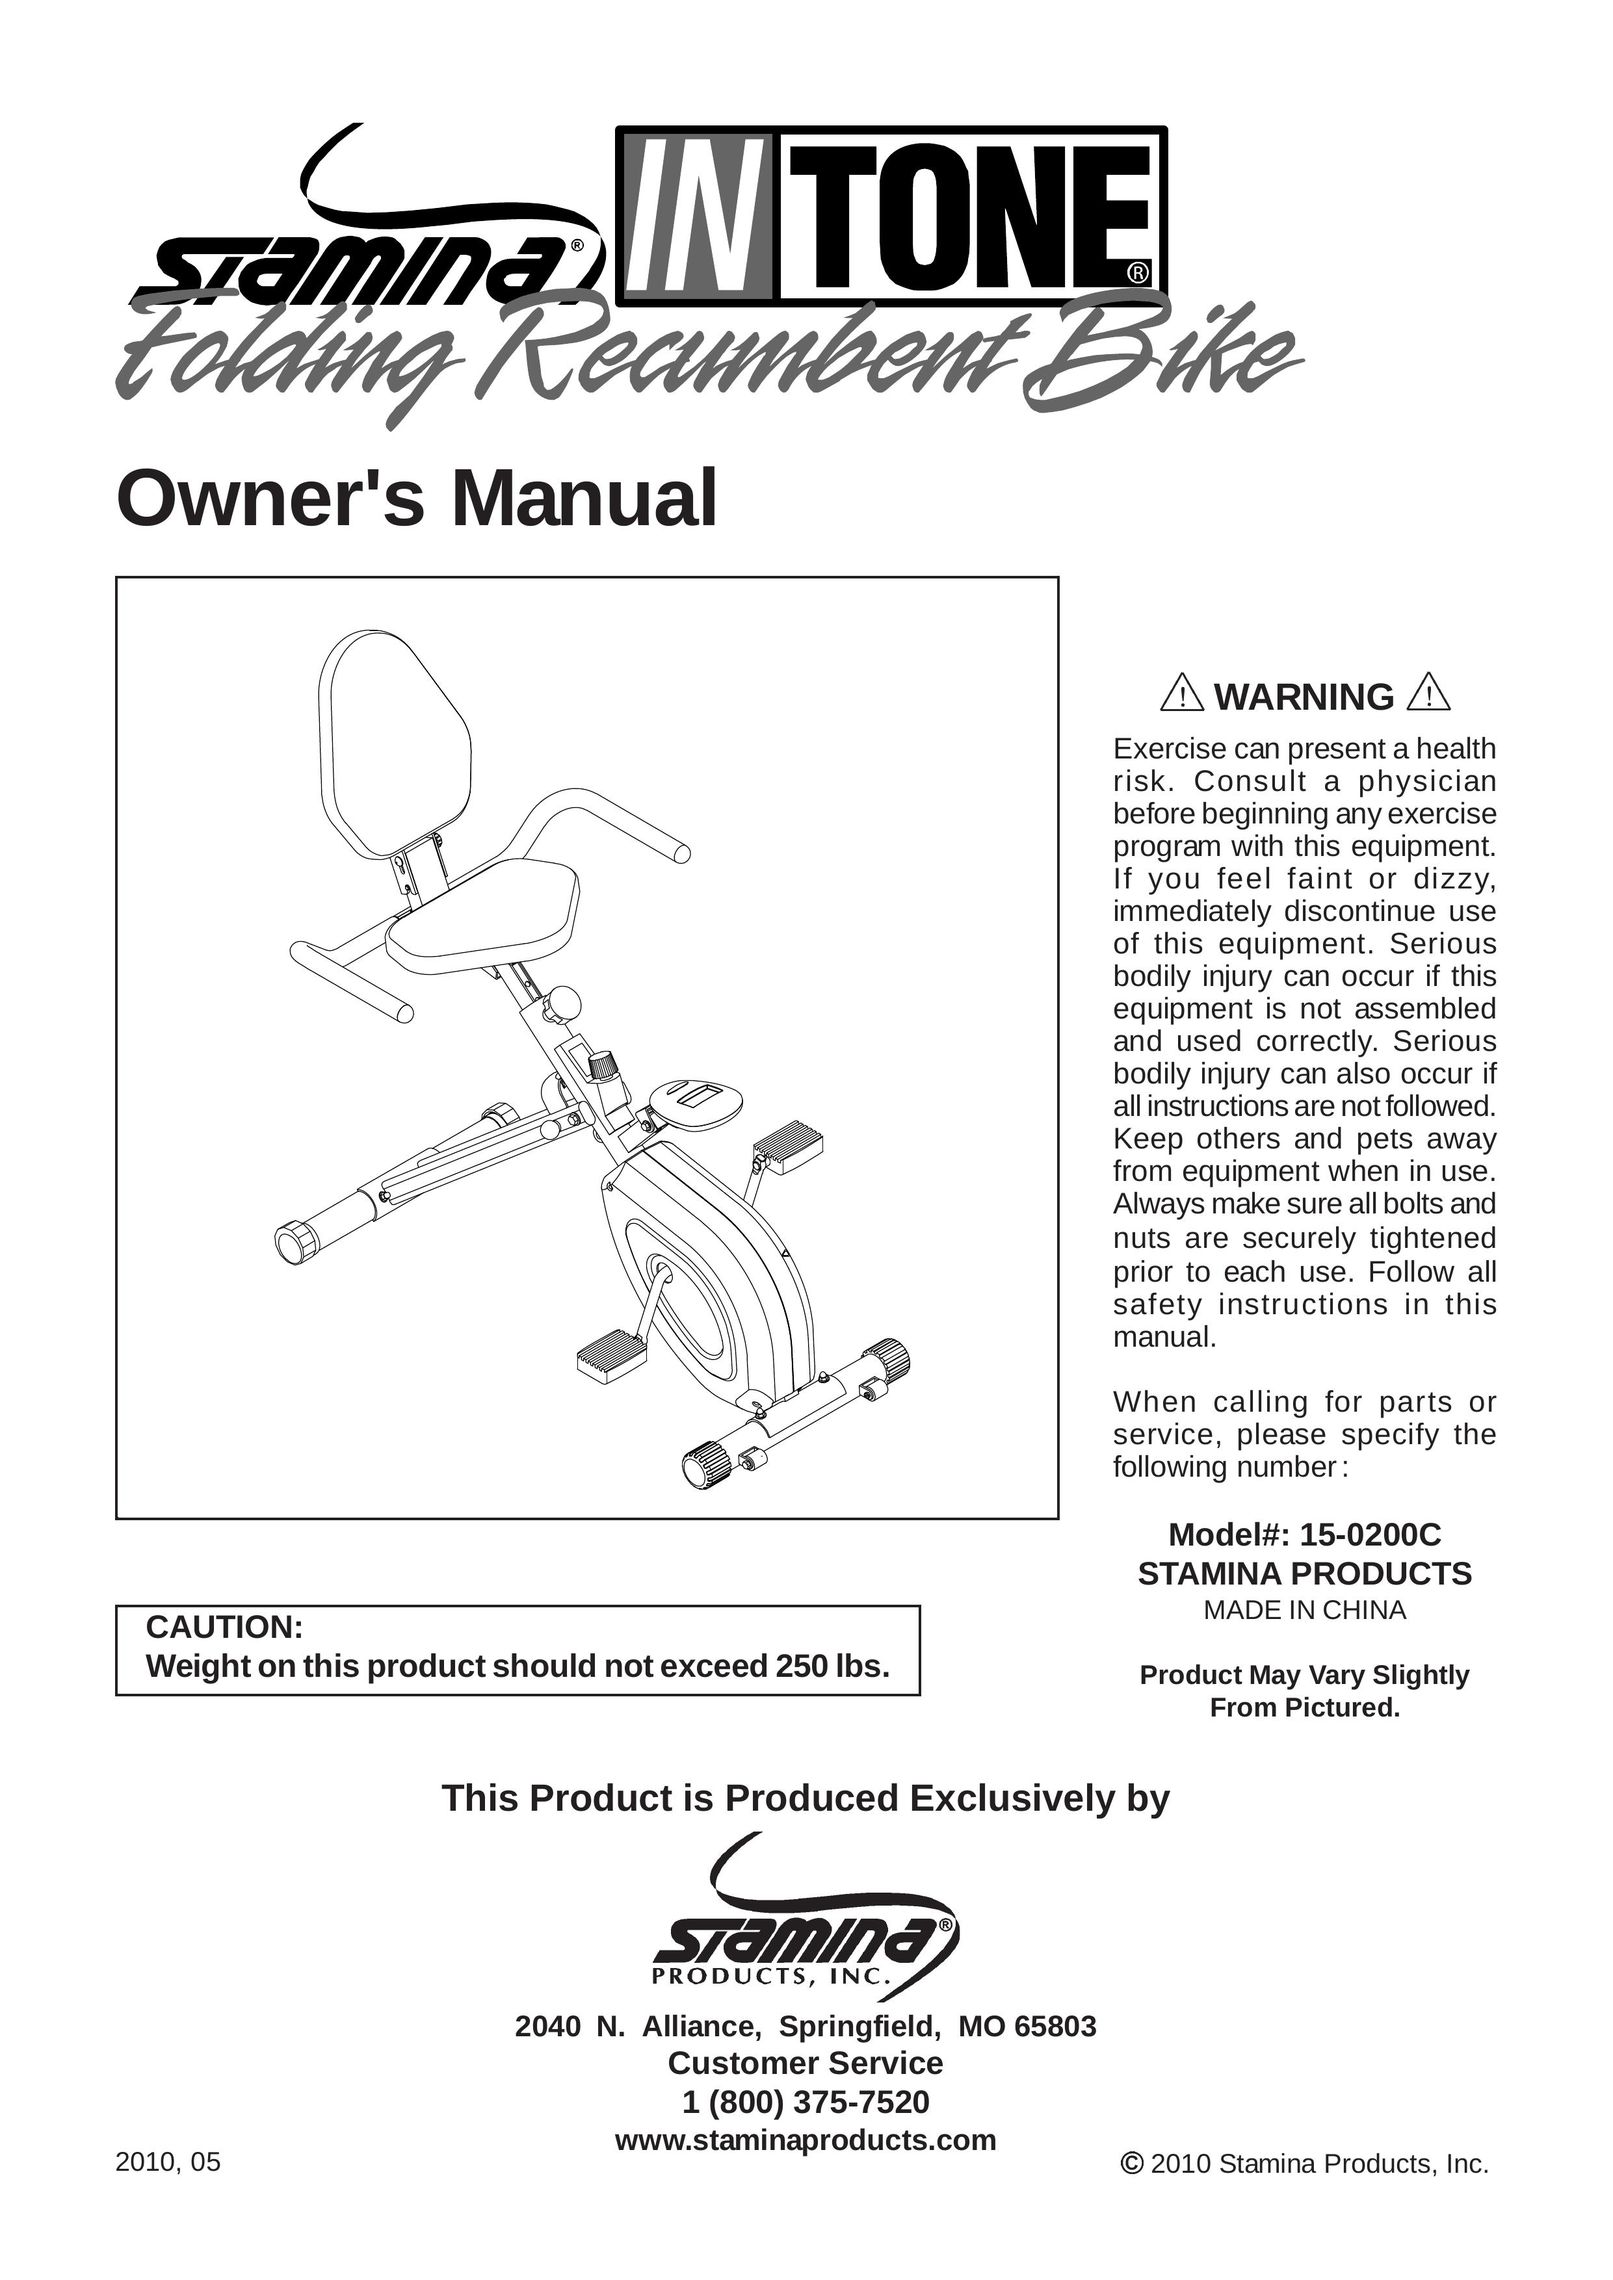 Stamina Products 15-0200C Exercise Bike User Manual